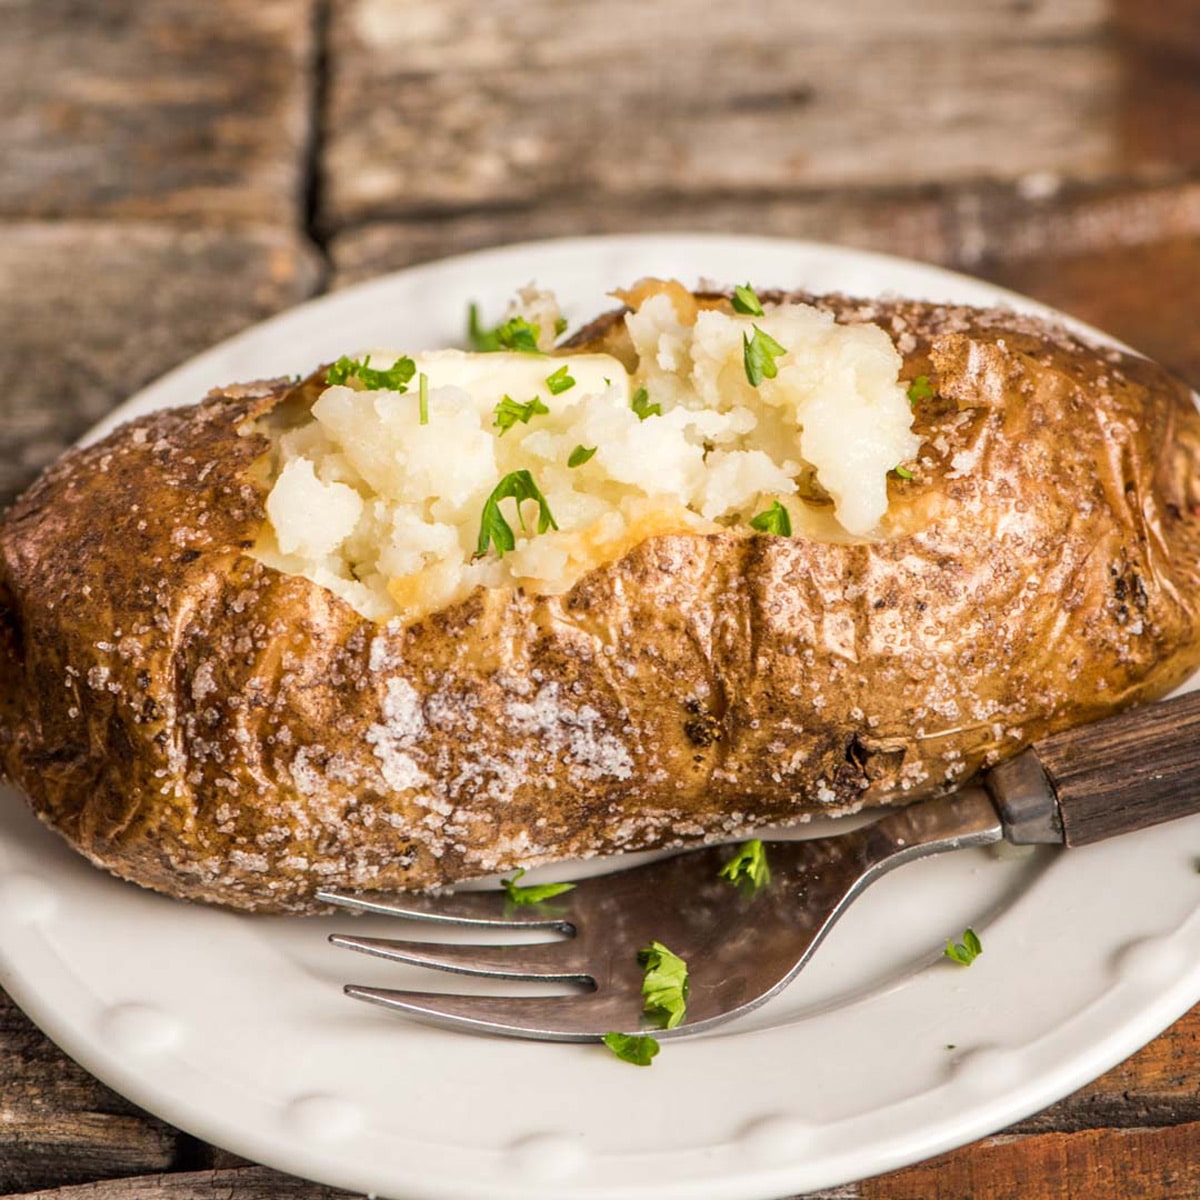 https://www.tastesoflizzyt.com/wp-content/uploads/2018/09/baked-potatoes.jpg